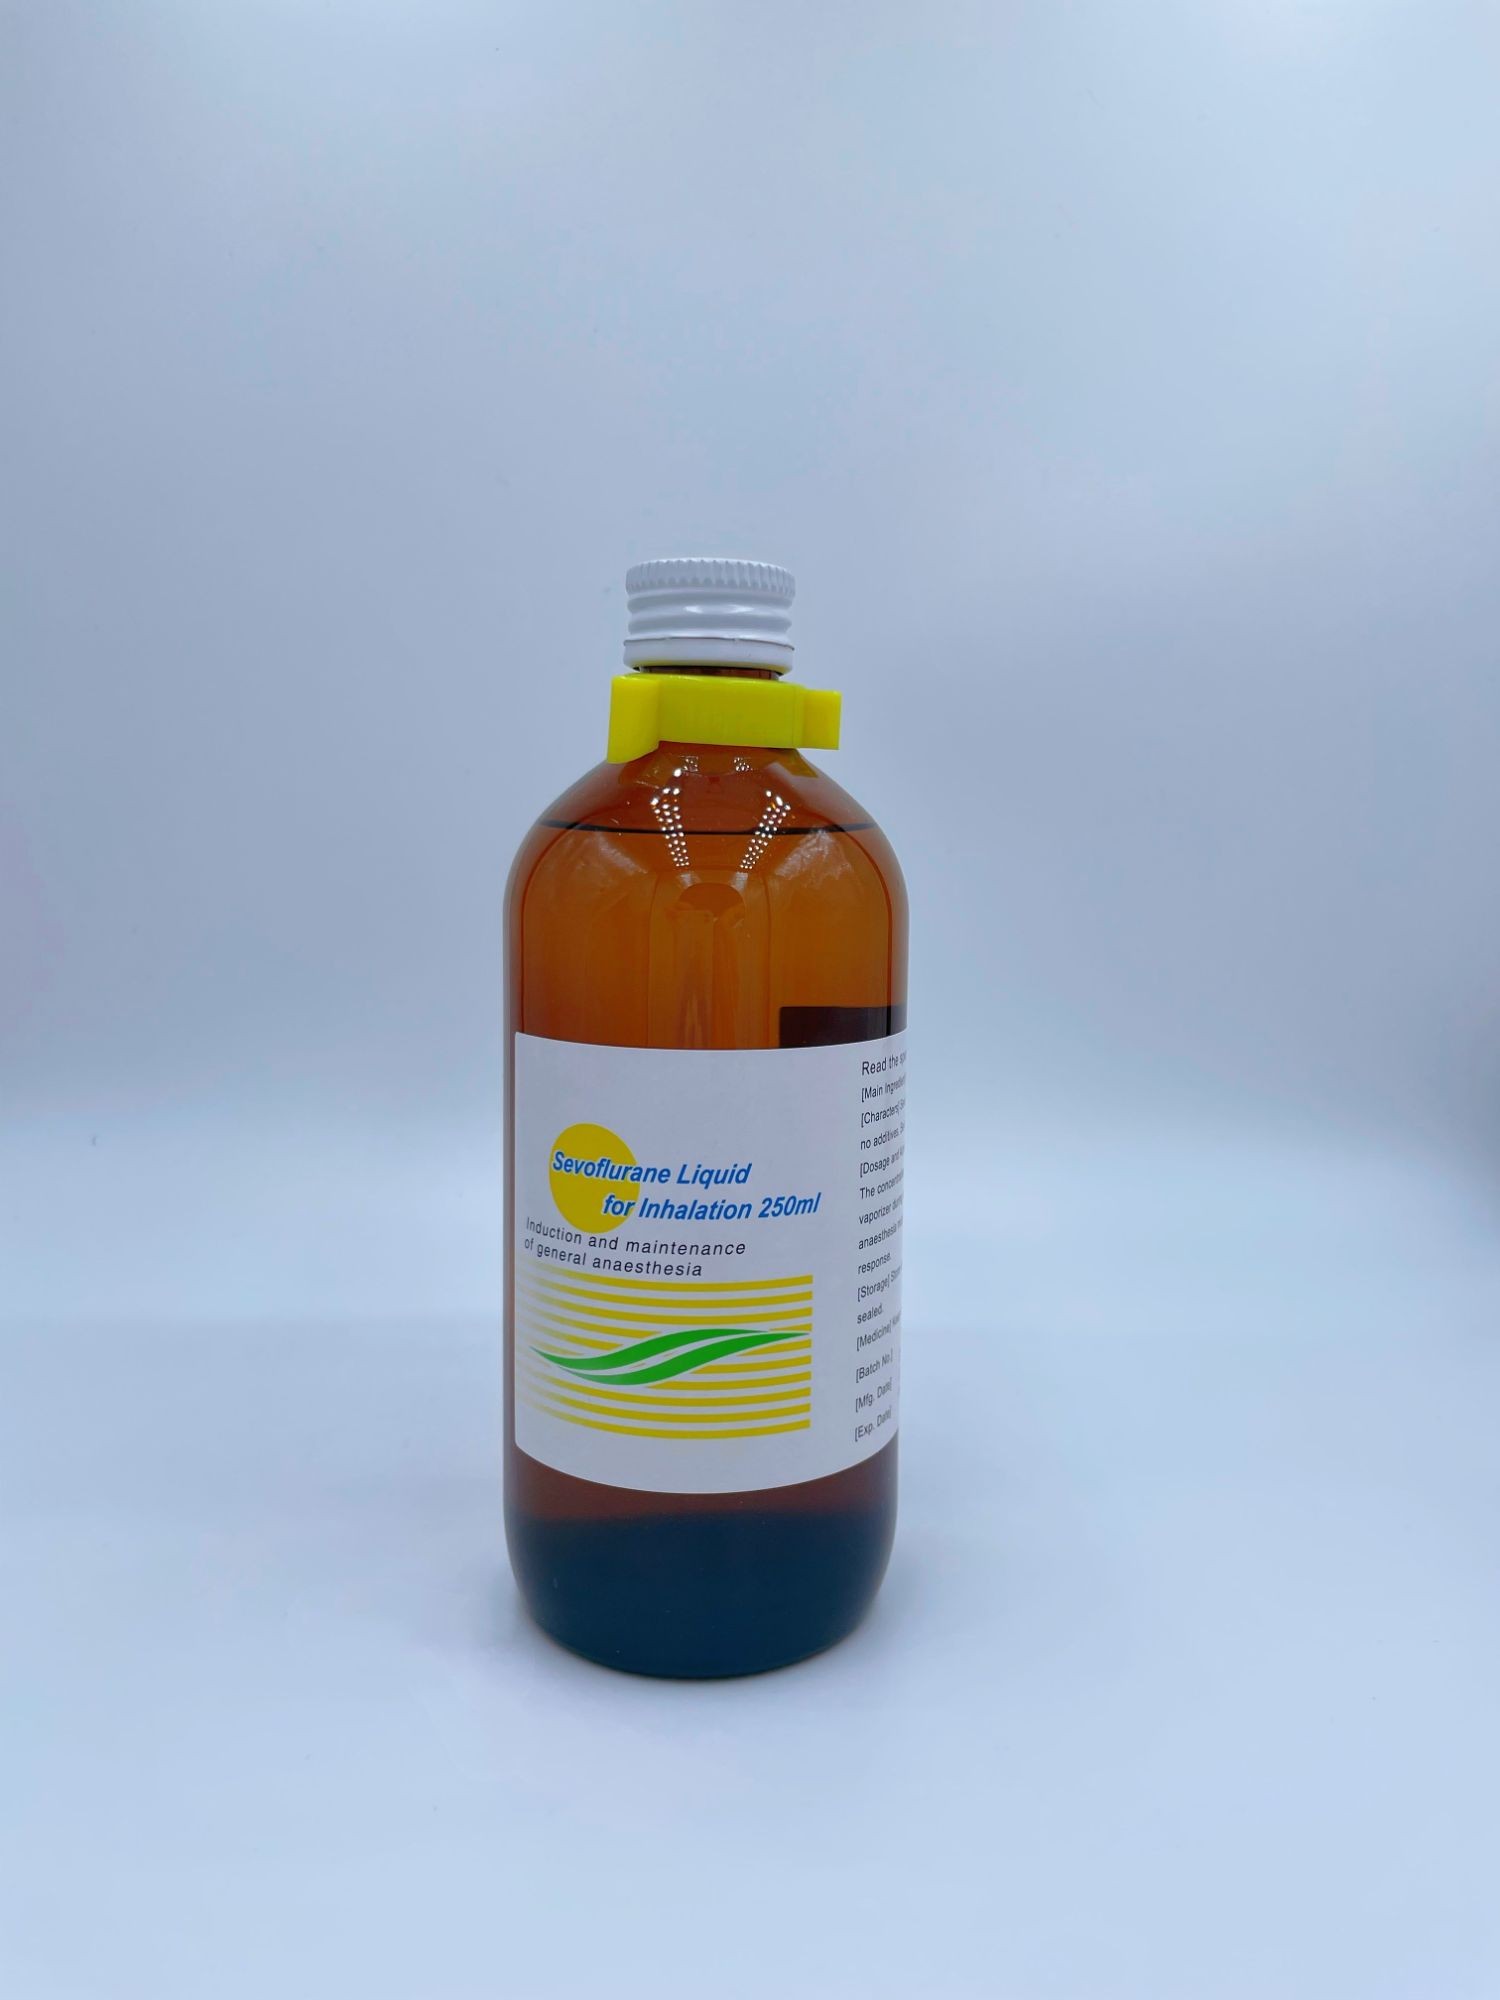 250ml Sevoflurane Liquid for Inhalation